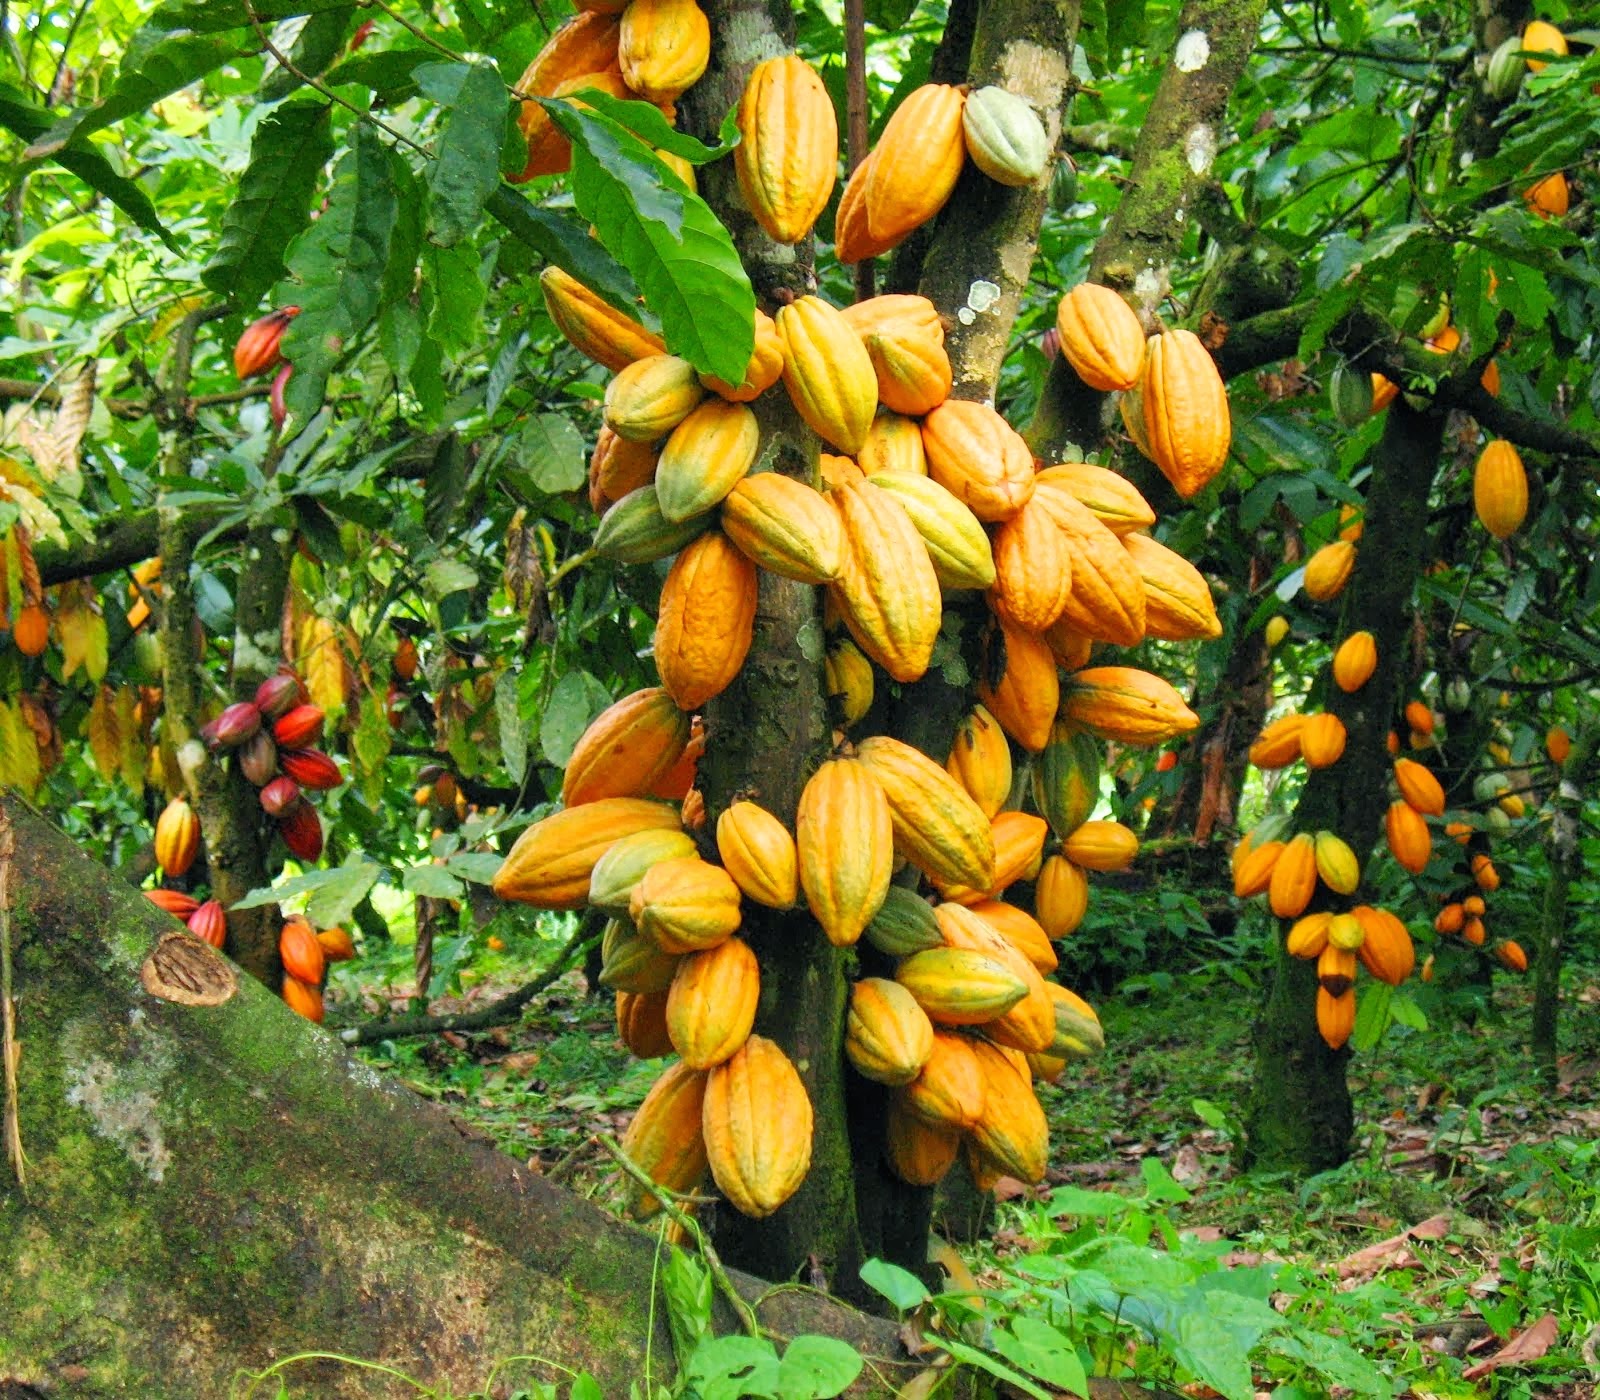 Cocoa Trees in Ghana